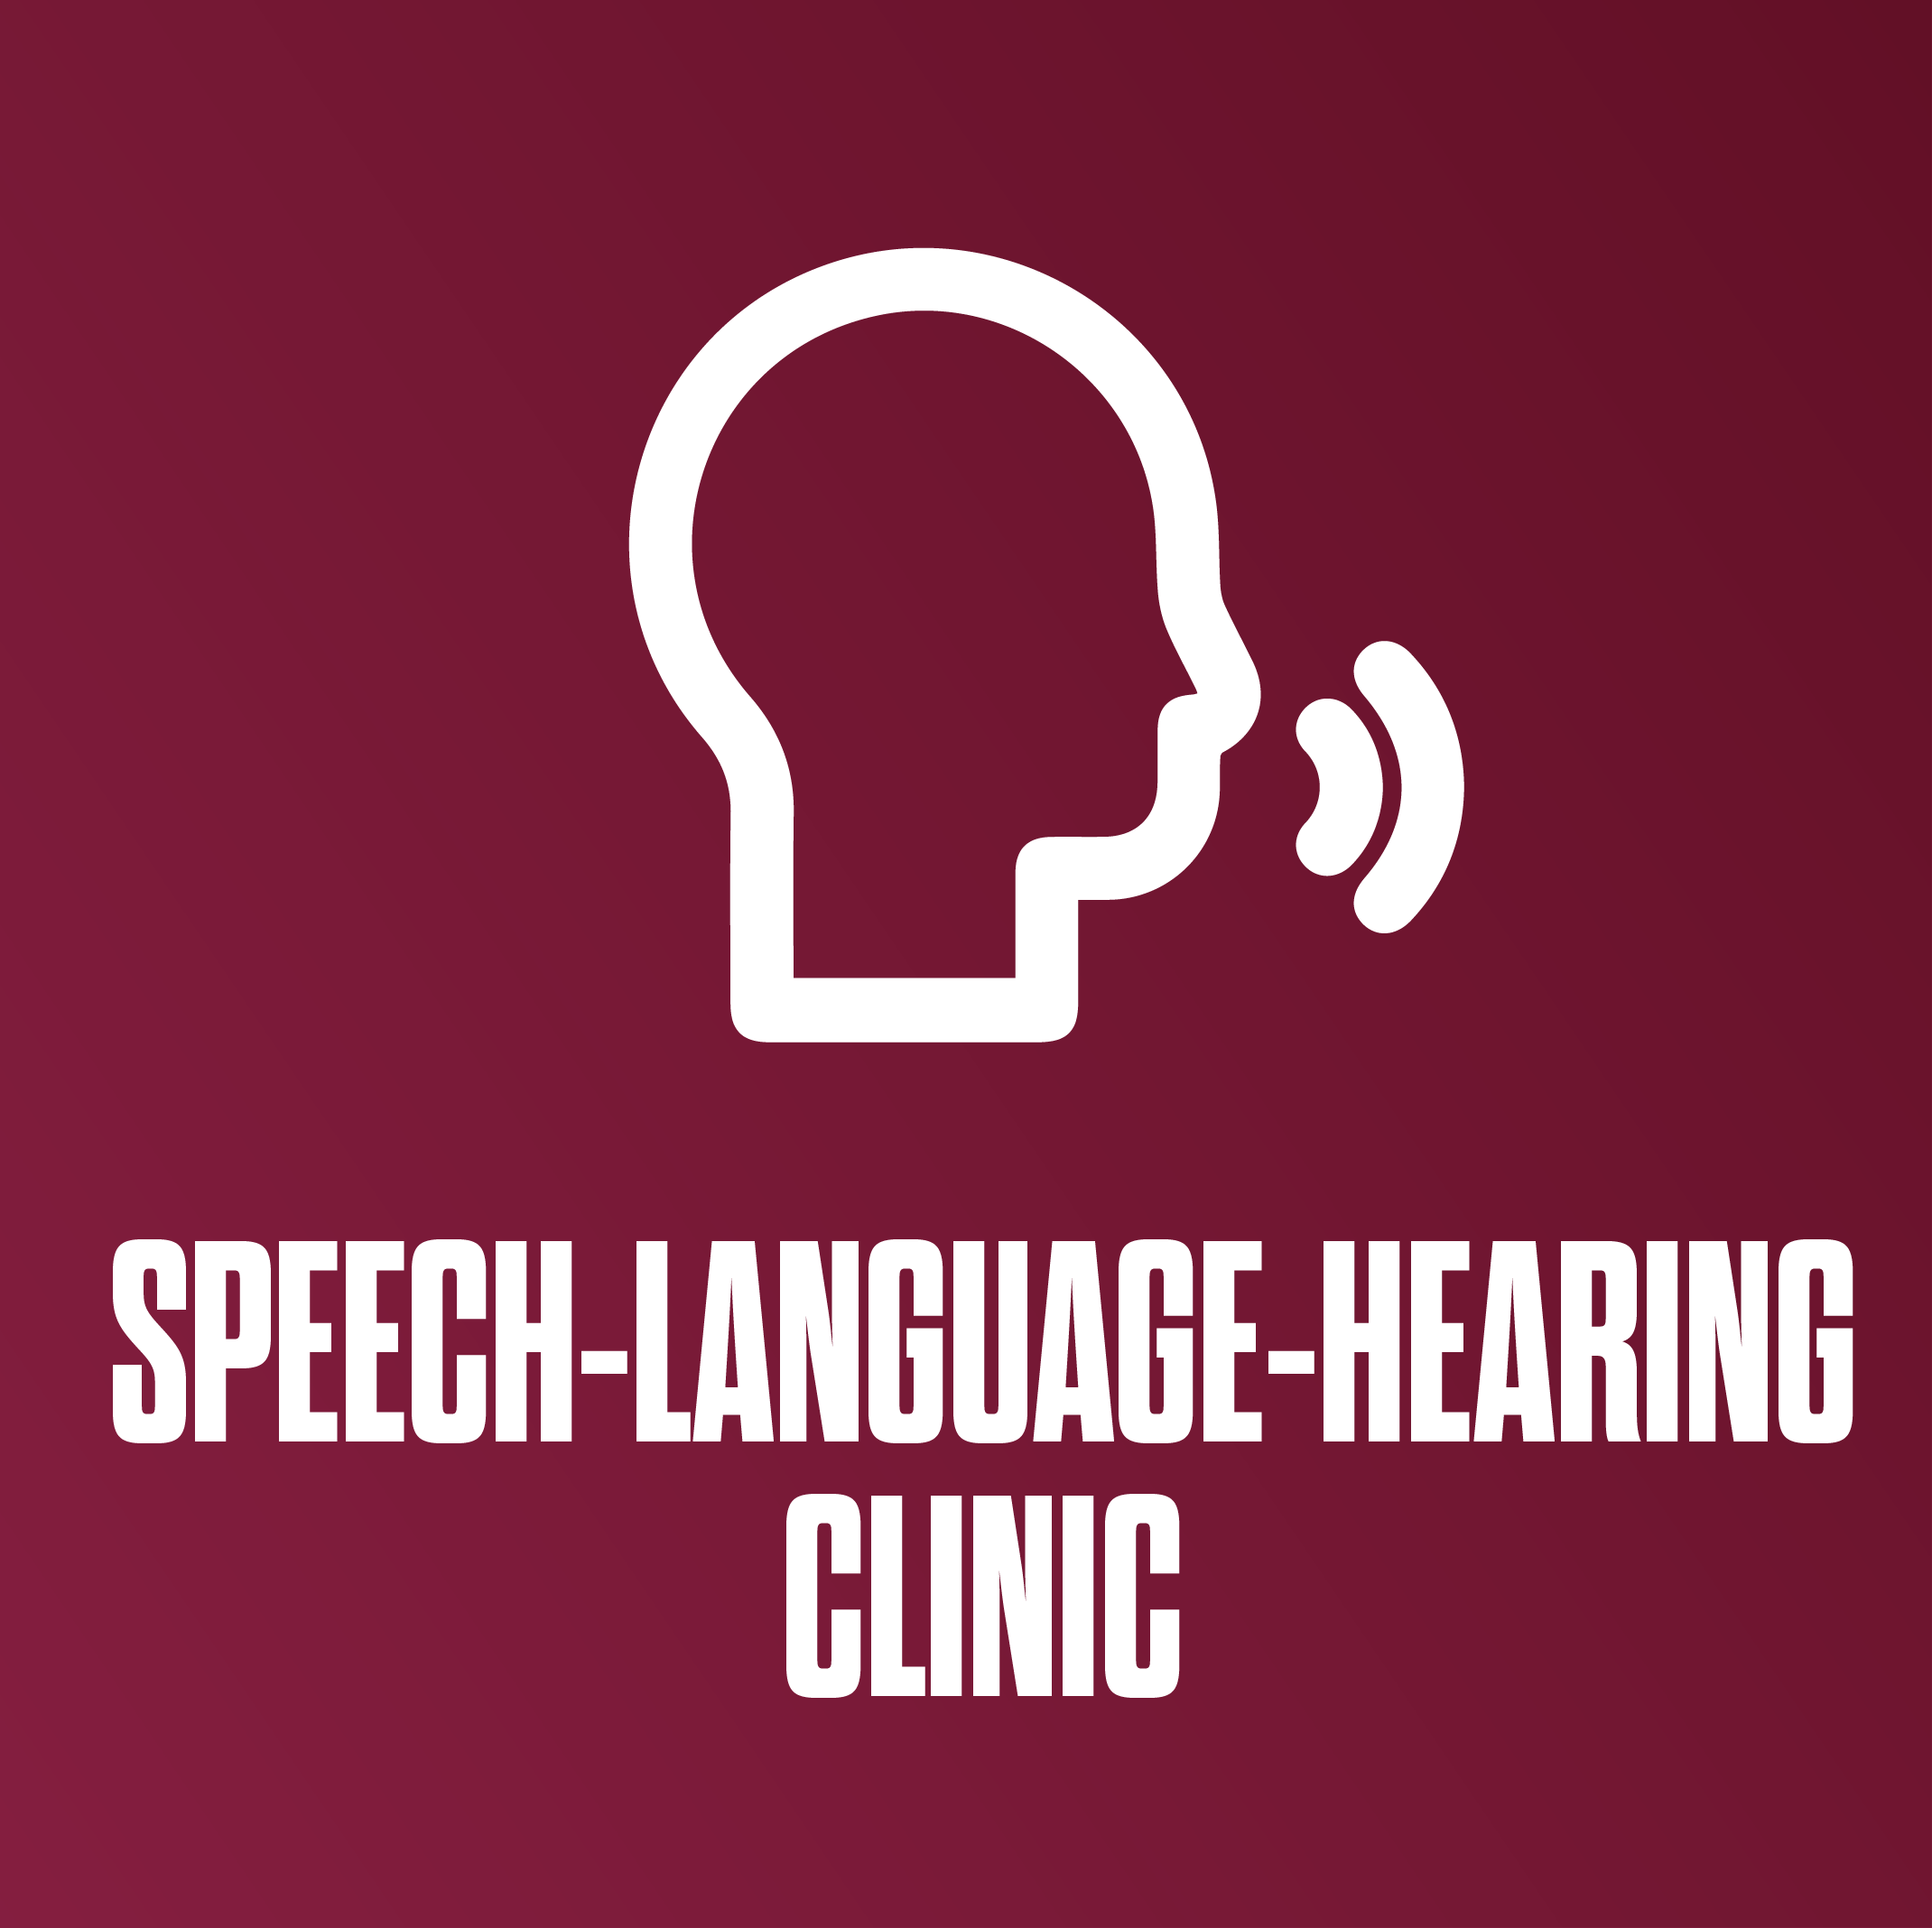 Speech-Language-Hearing Clinic